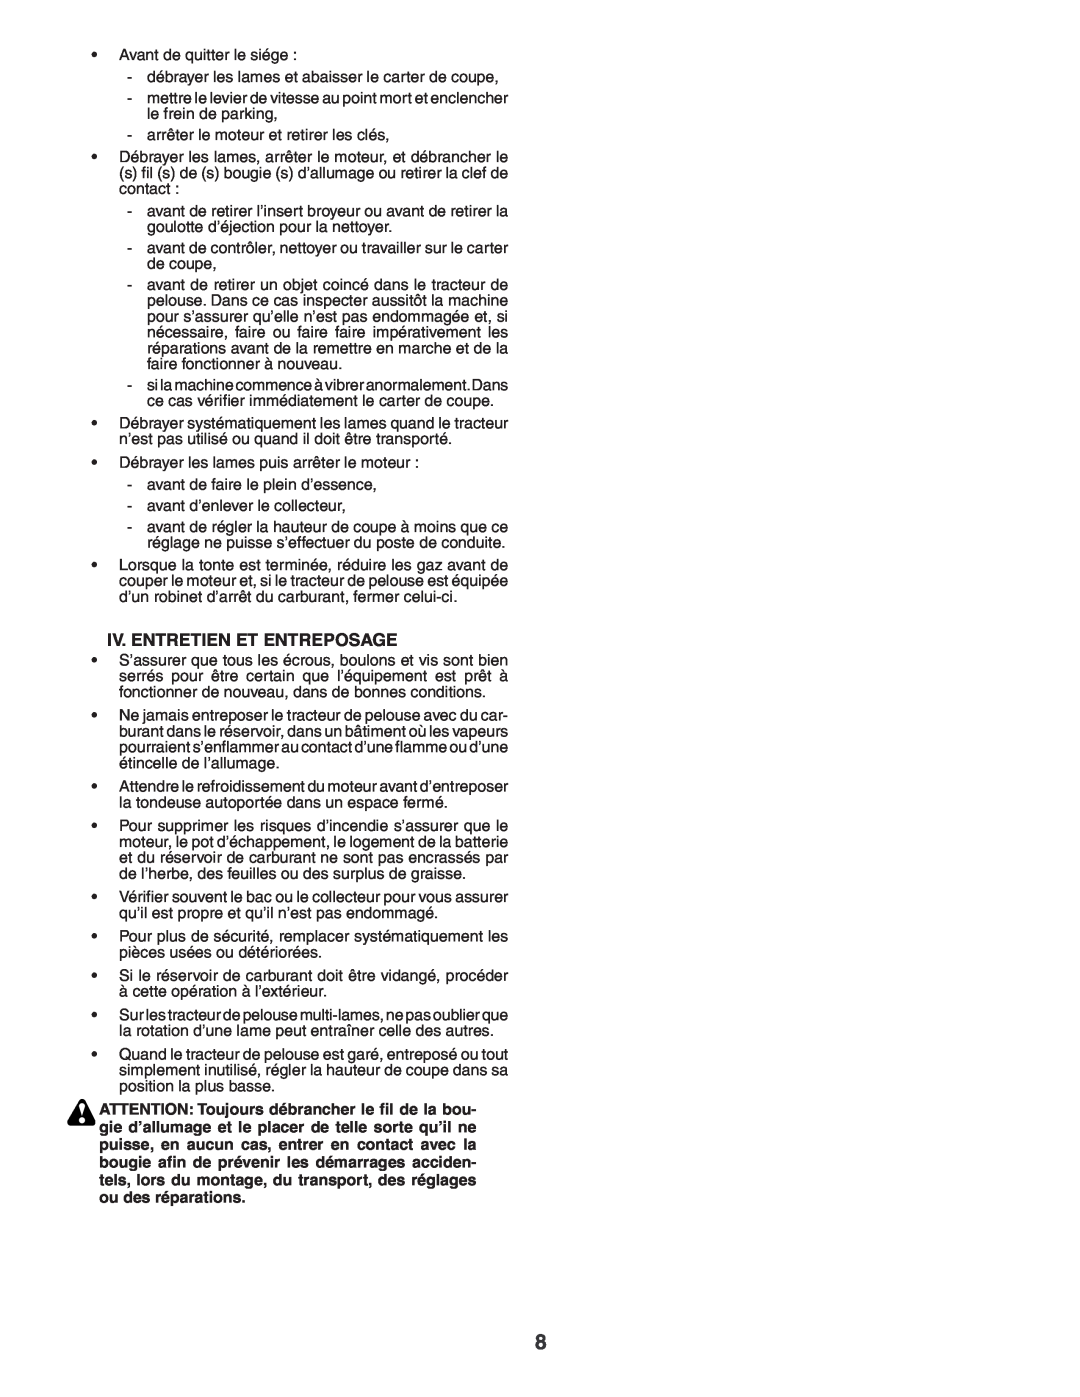 Husqvarna YTH180XP instruction manual Iv. Entretien Et Entreposage 